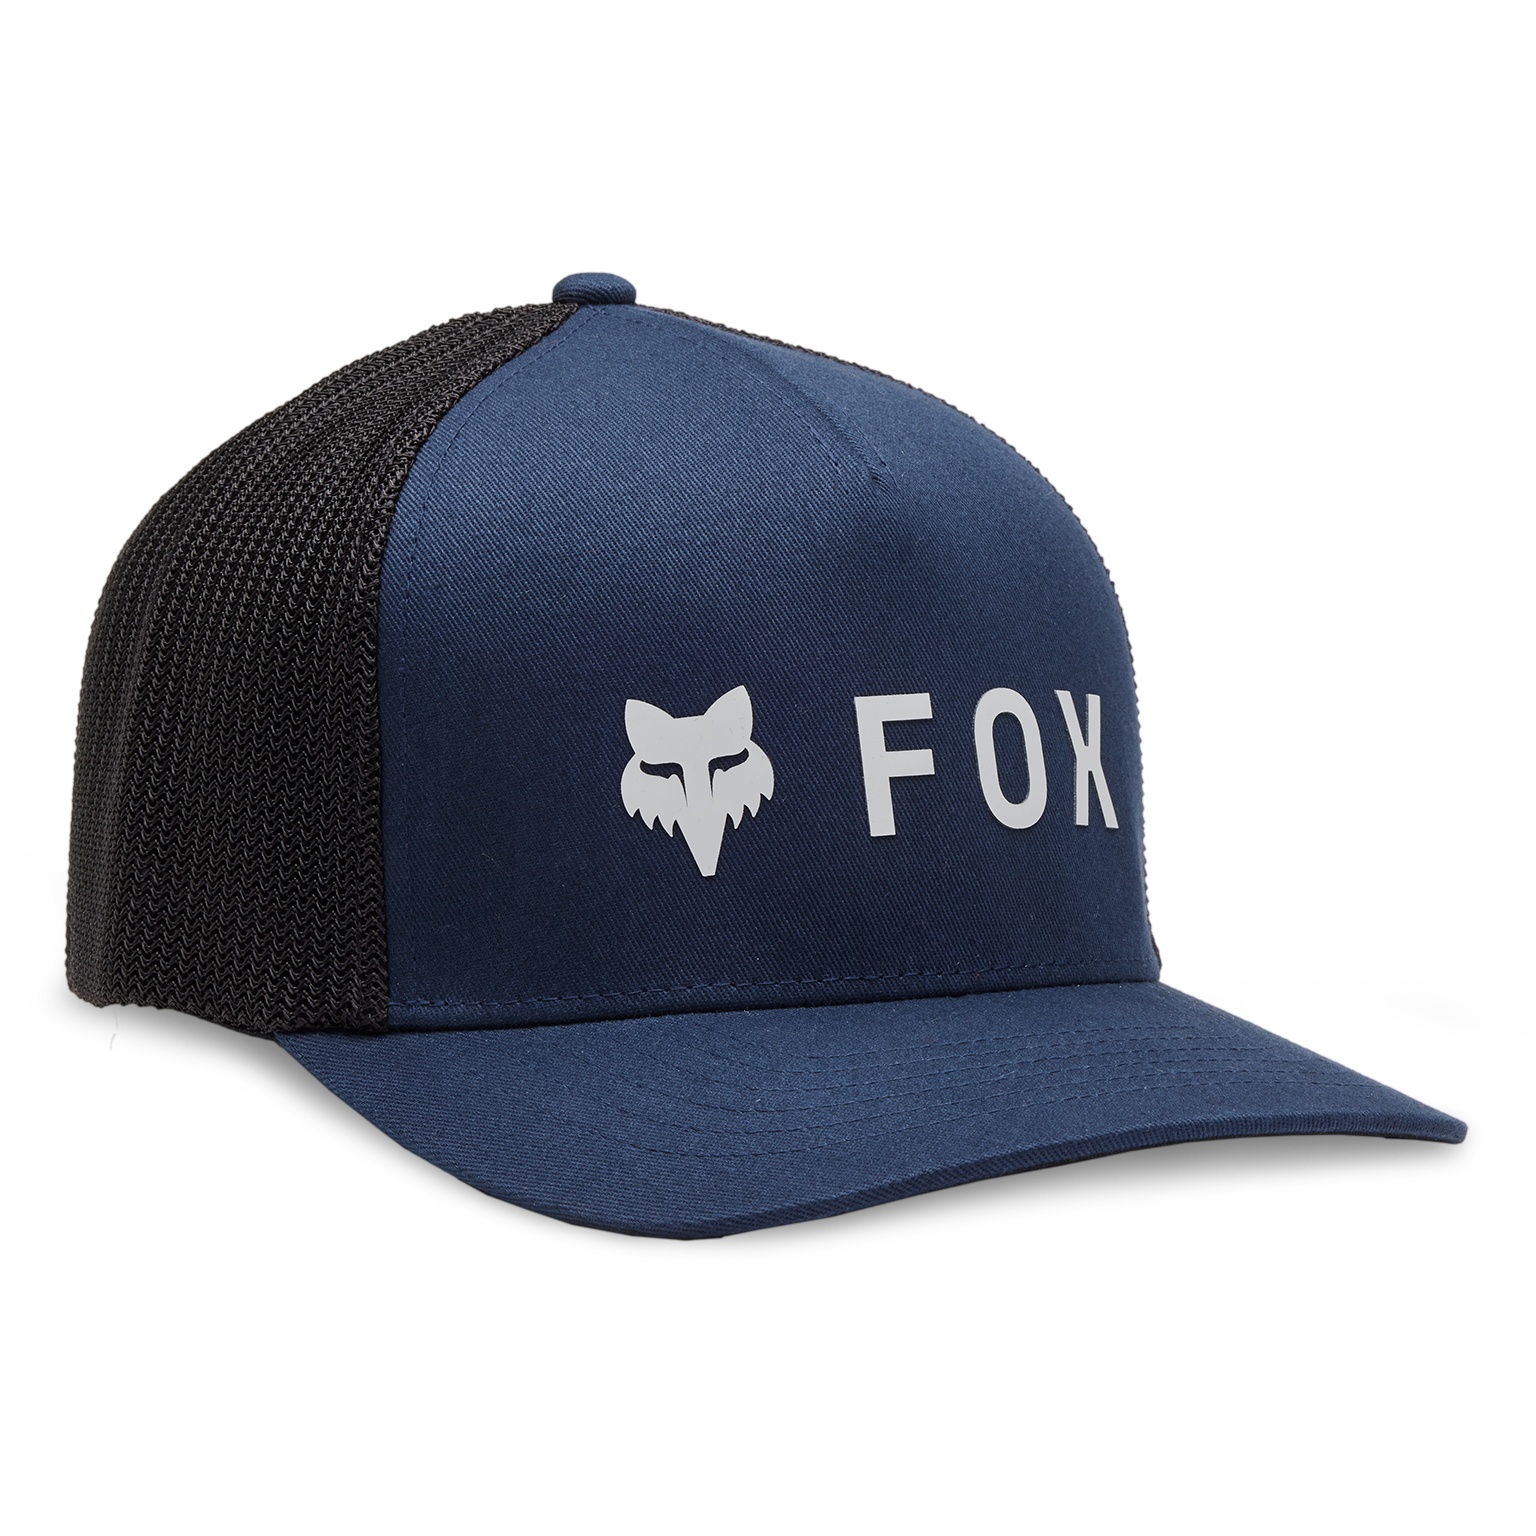 Productfoto van FOX Absolute Flexfit Pet - midnight